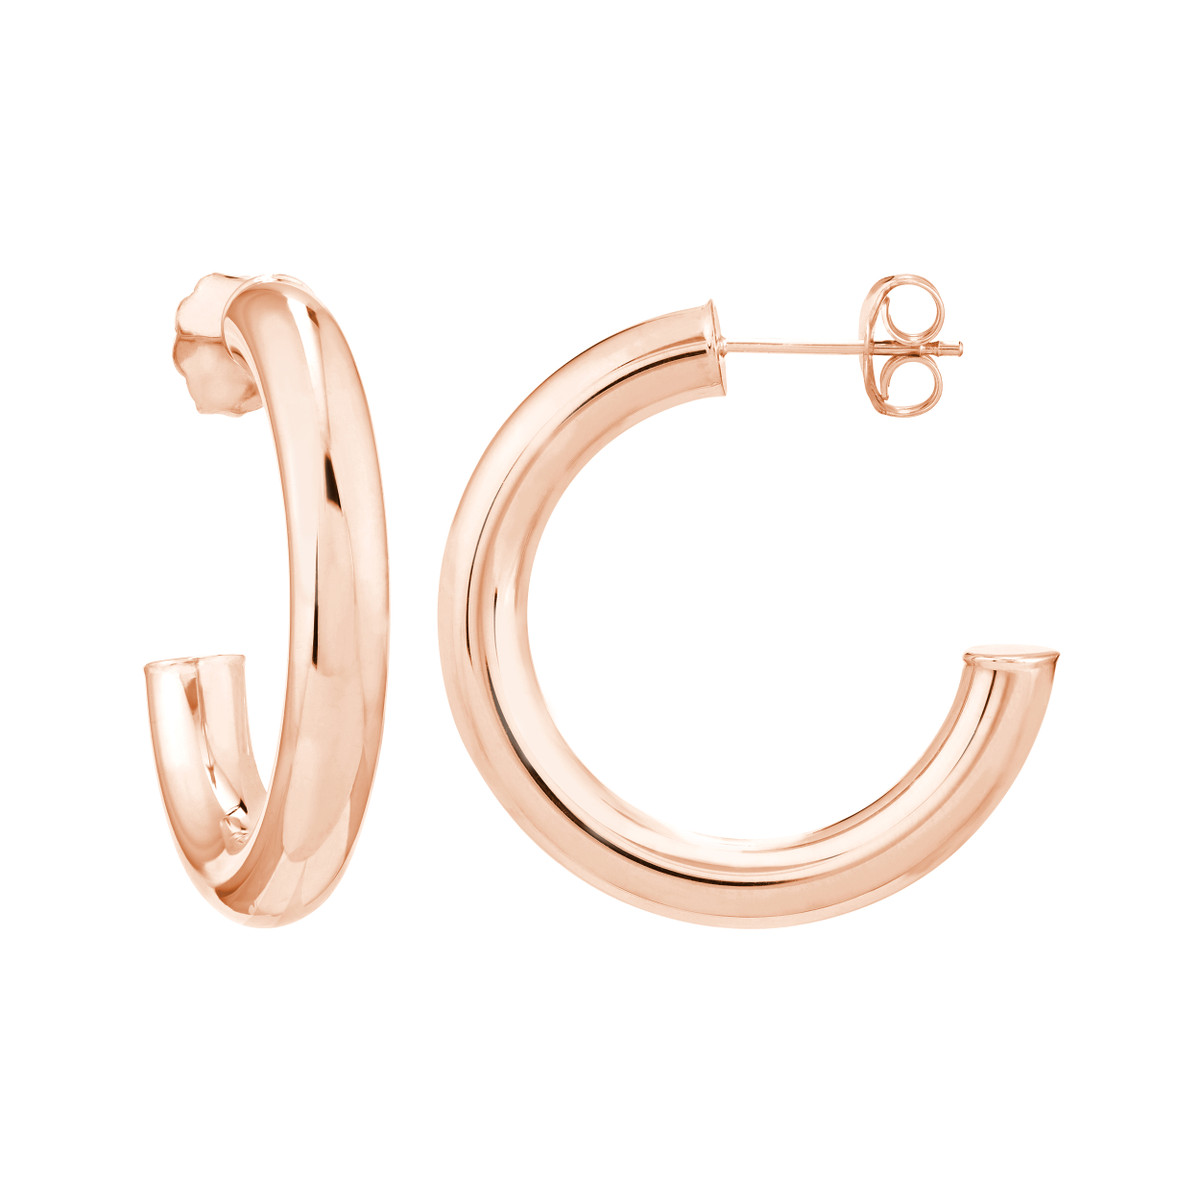 Korman Signature 14kt Rose Gold Polished Open Hoop Earrings